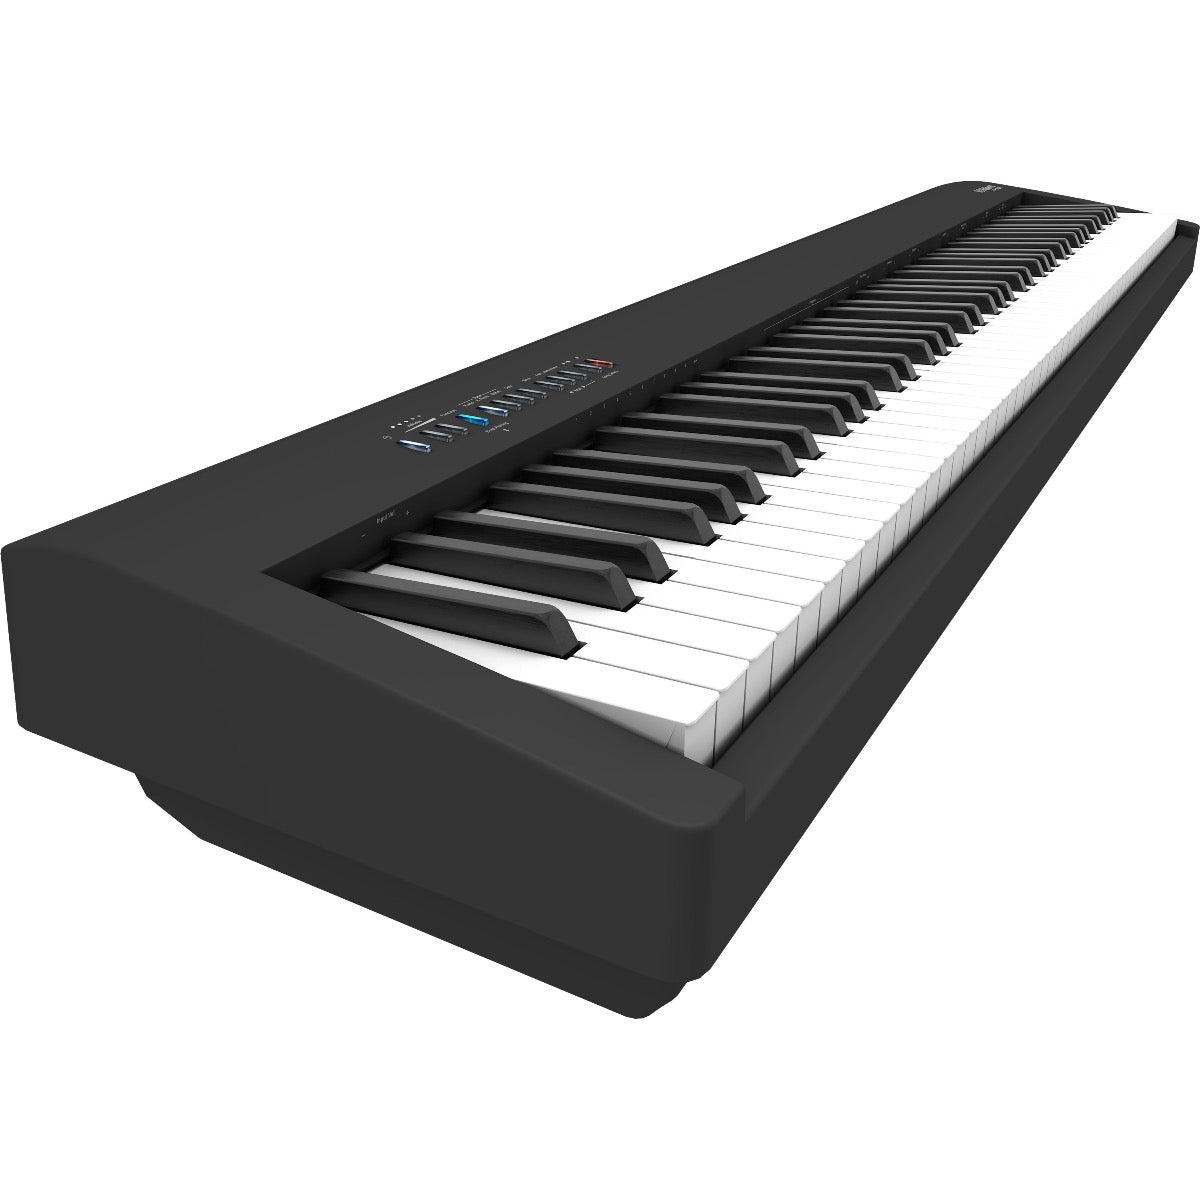 Roland FP-30X Digital Piano - Black COMPLETE HOME BUNDLE